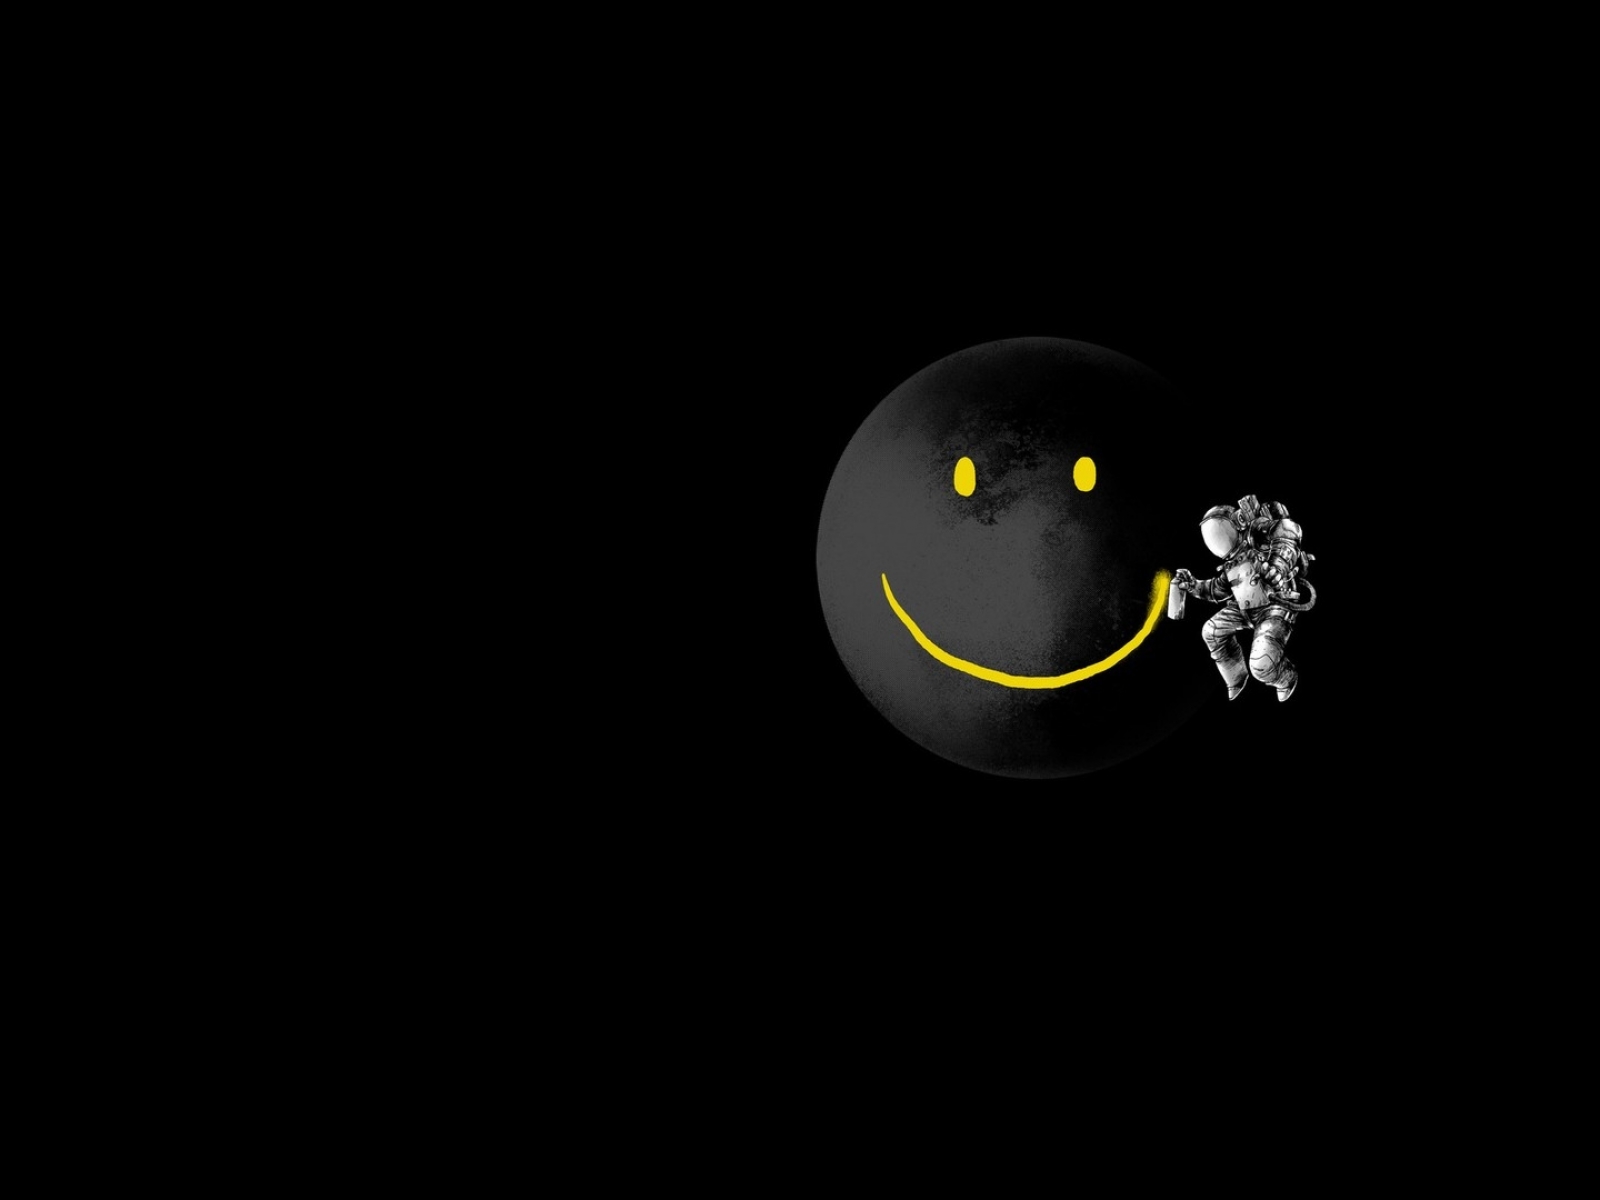  smiley face spaceman black background 1920x1080 wallpaper Wallpaper 1600x1200